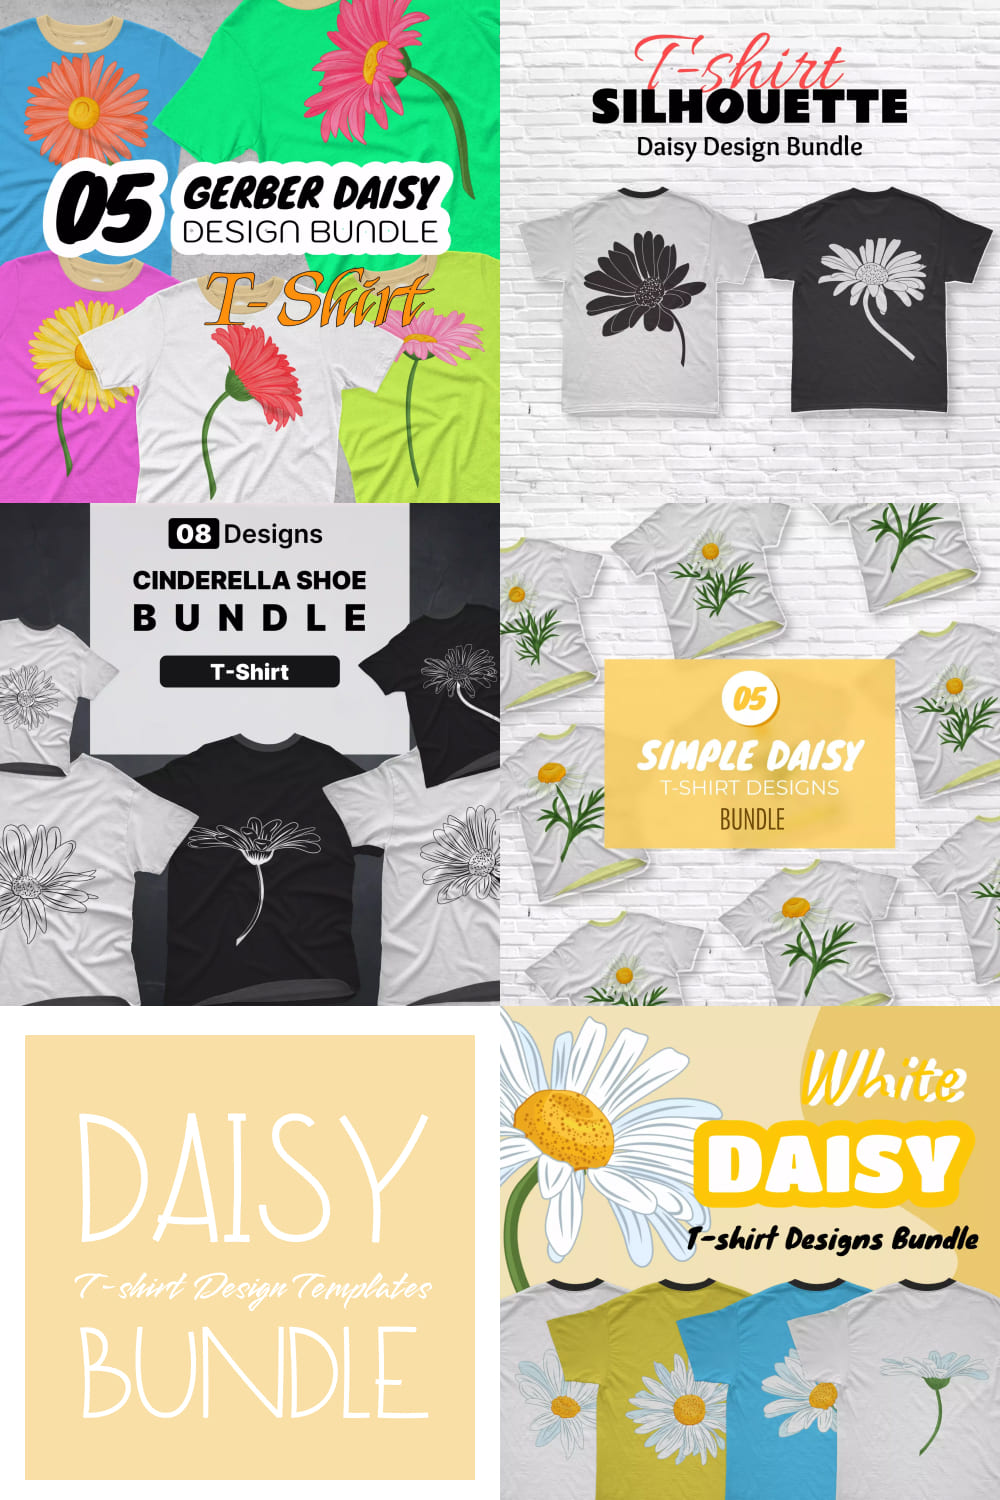 Daisy T-shirt Design Templates Bundle - Pinterest.